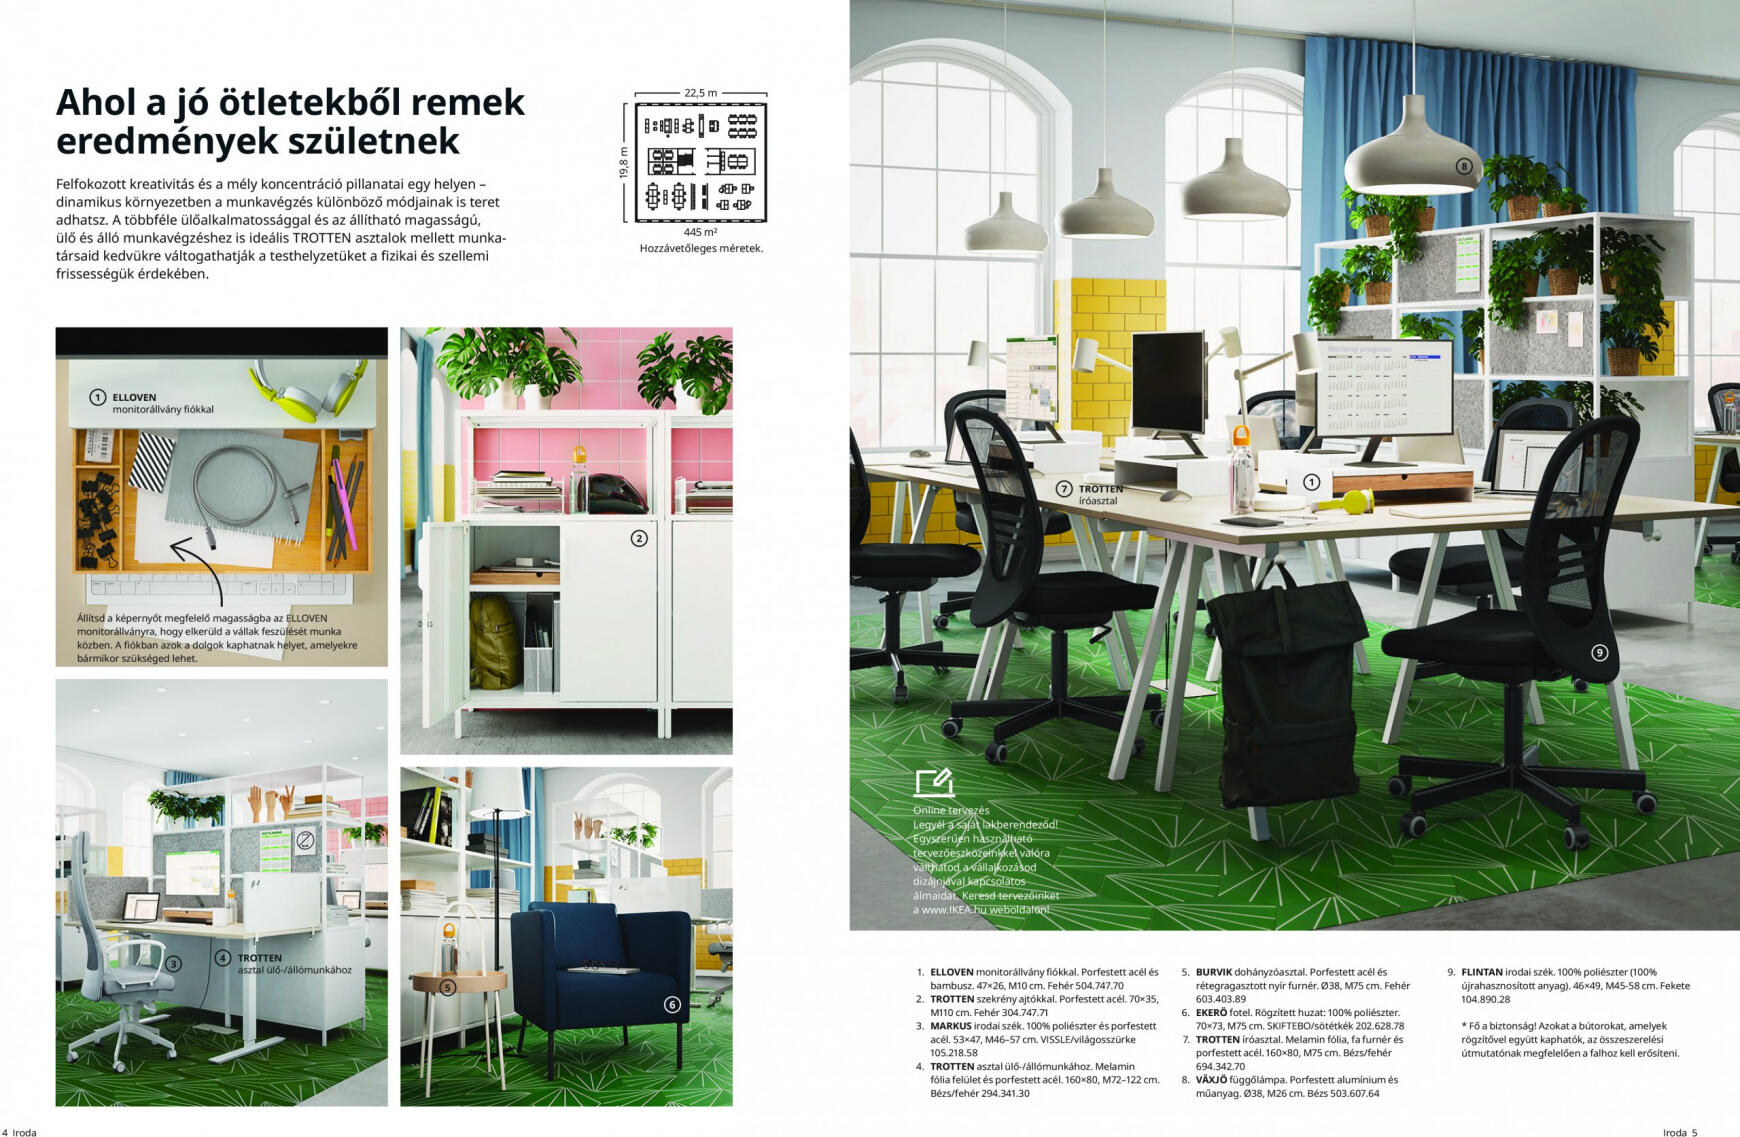 ikea - IKEA újság vasárnaptól 01.01. - page: 3